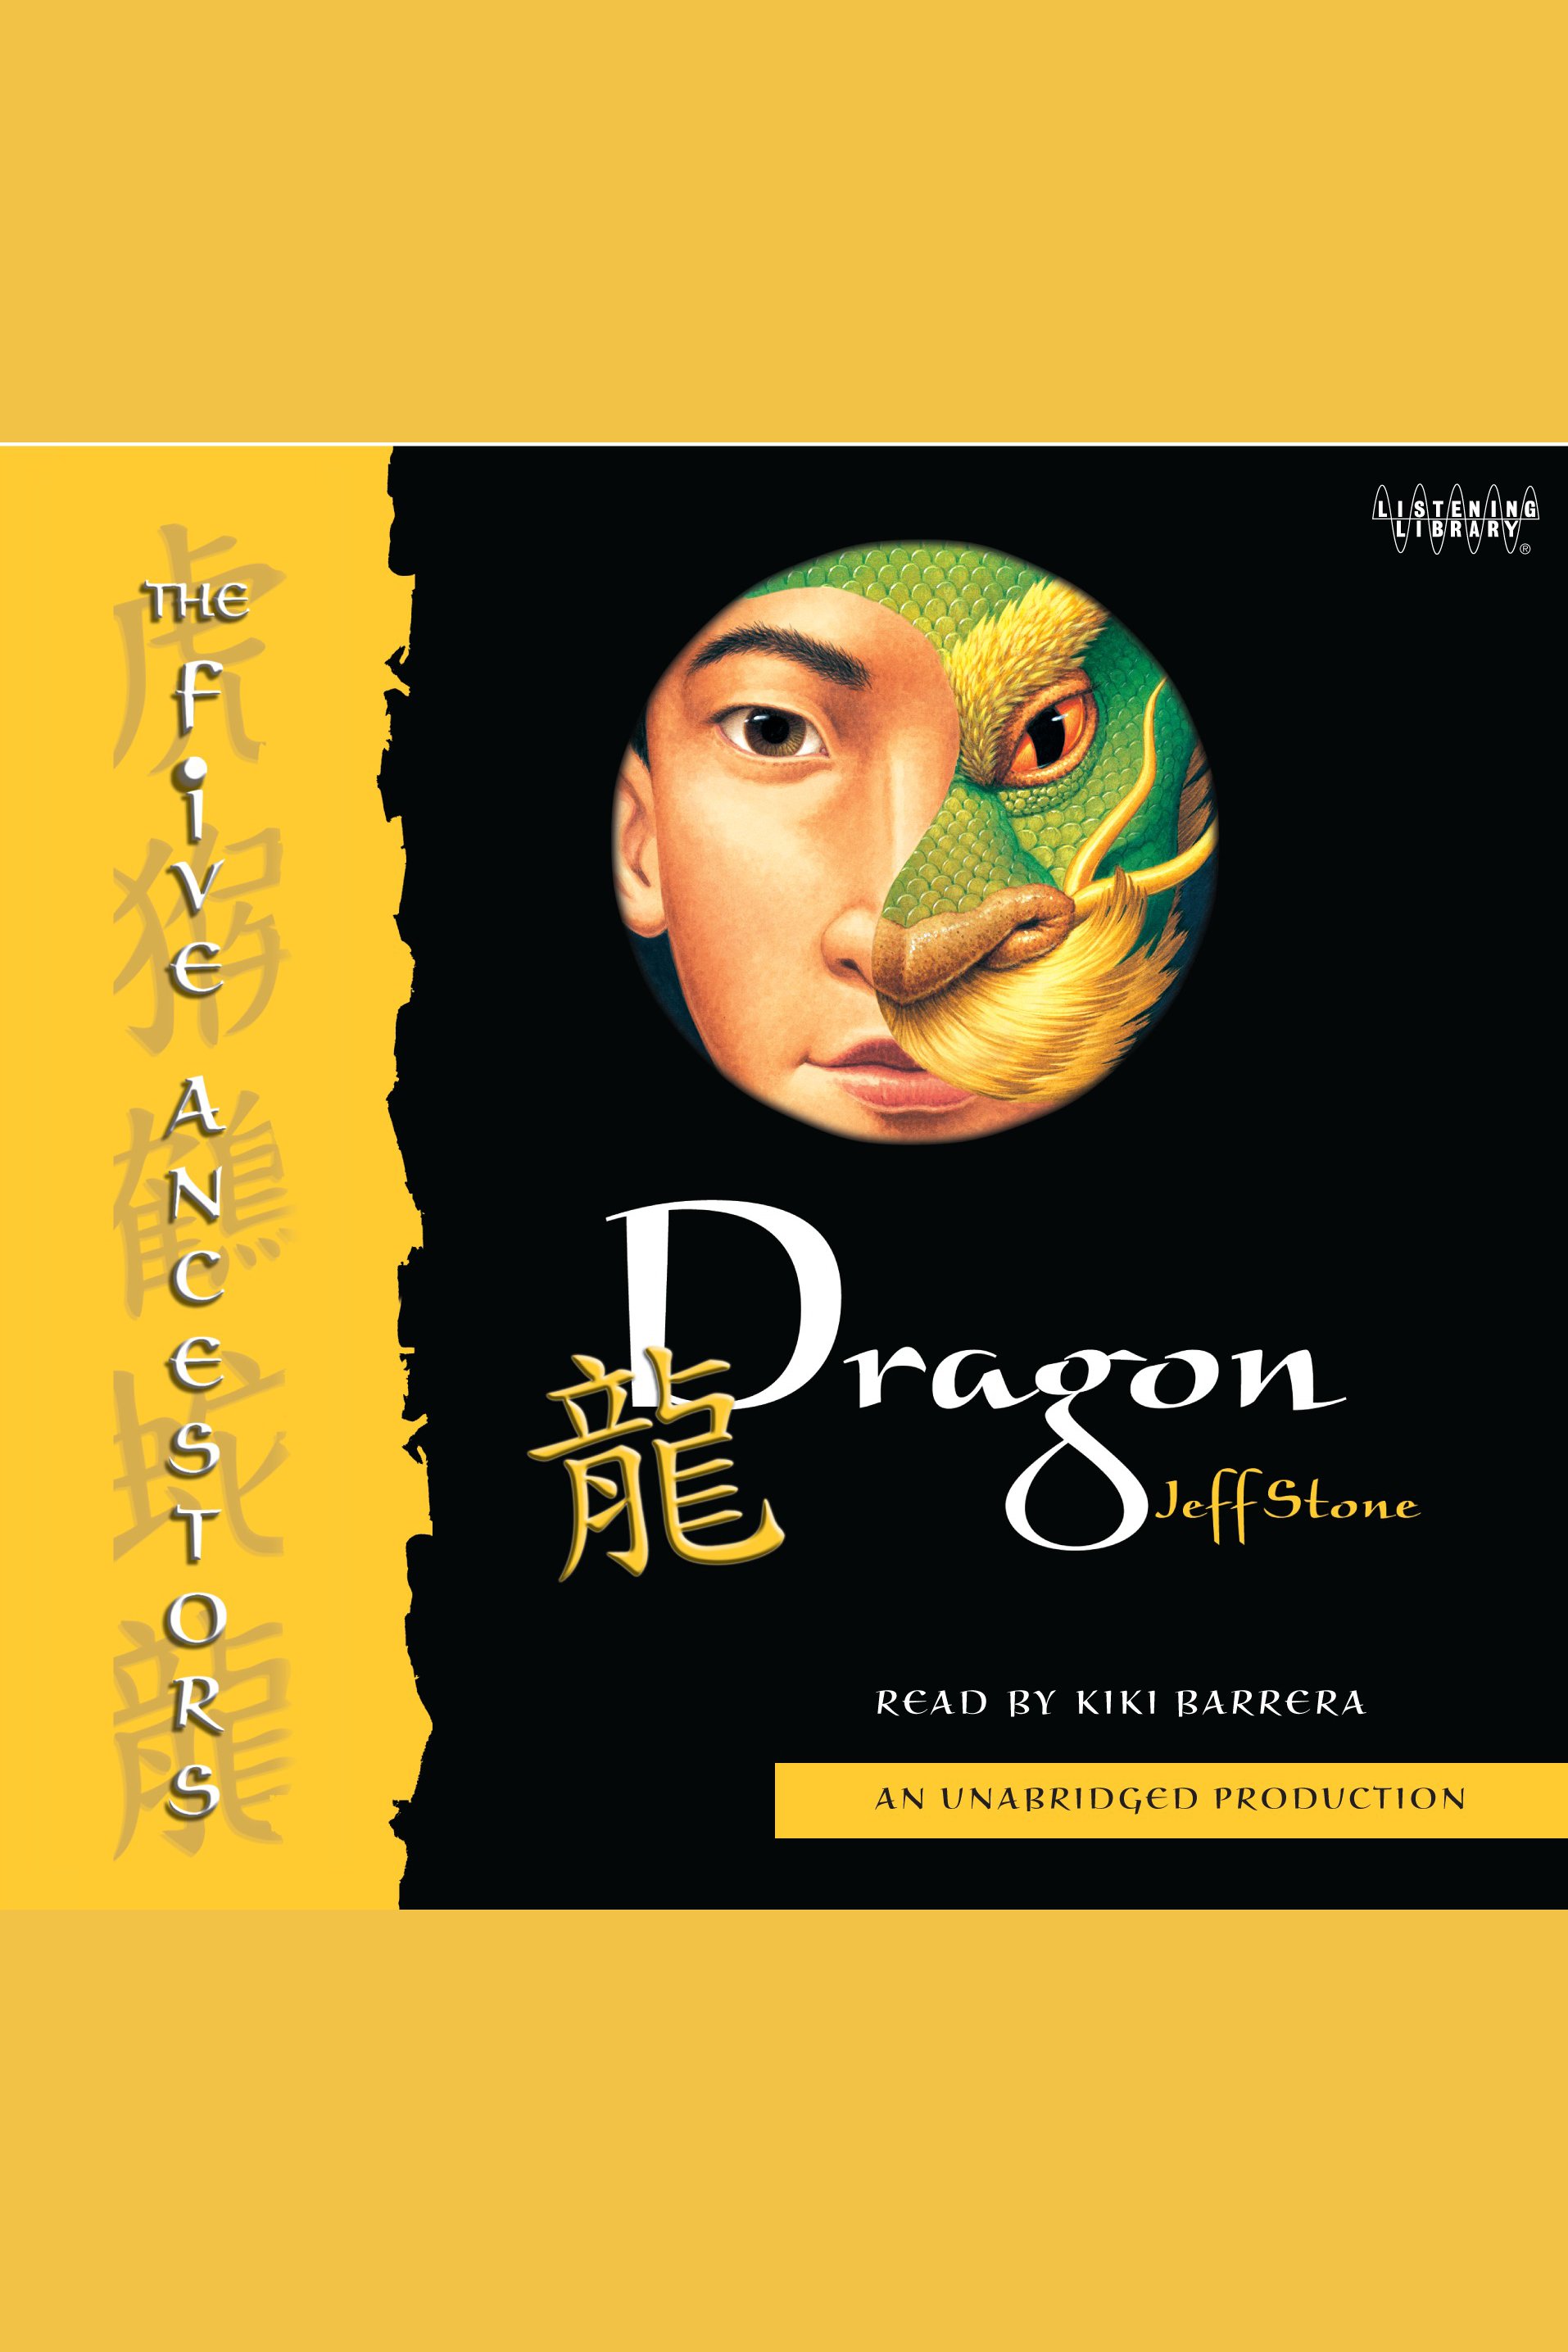 Dragon cover image